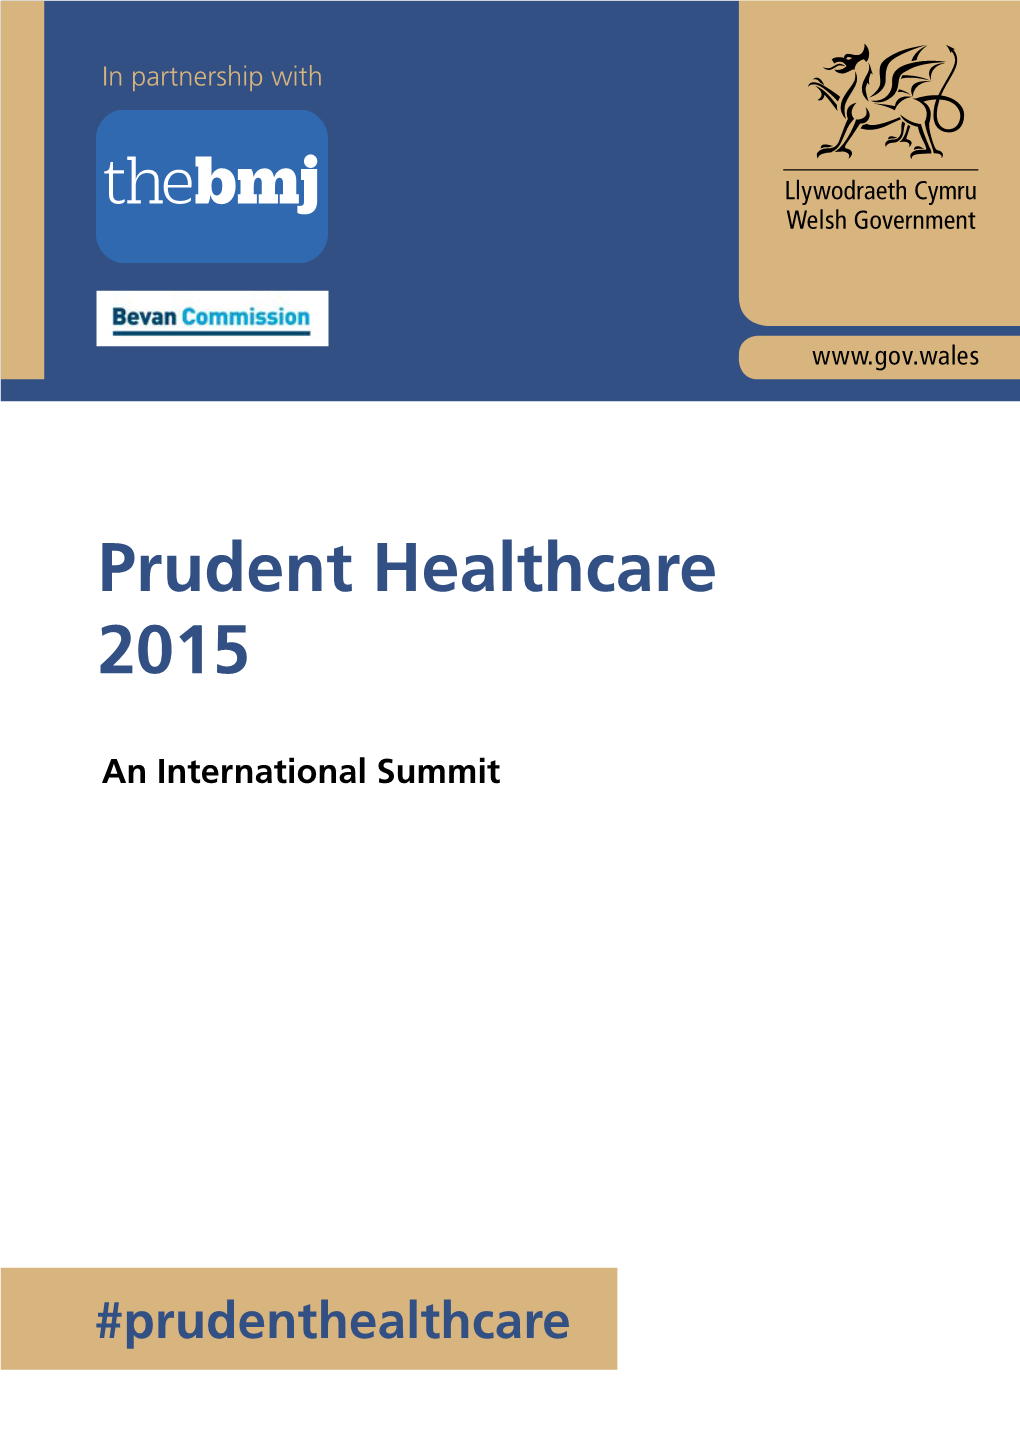 Prudent Healthcare 2015